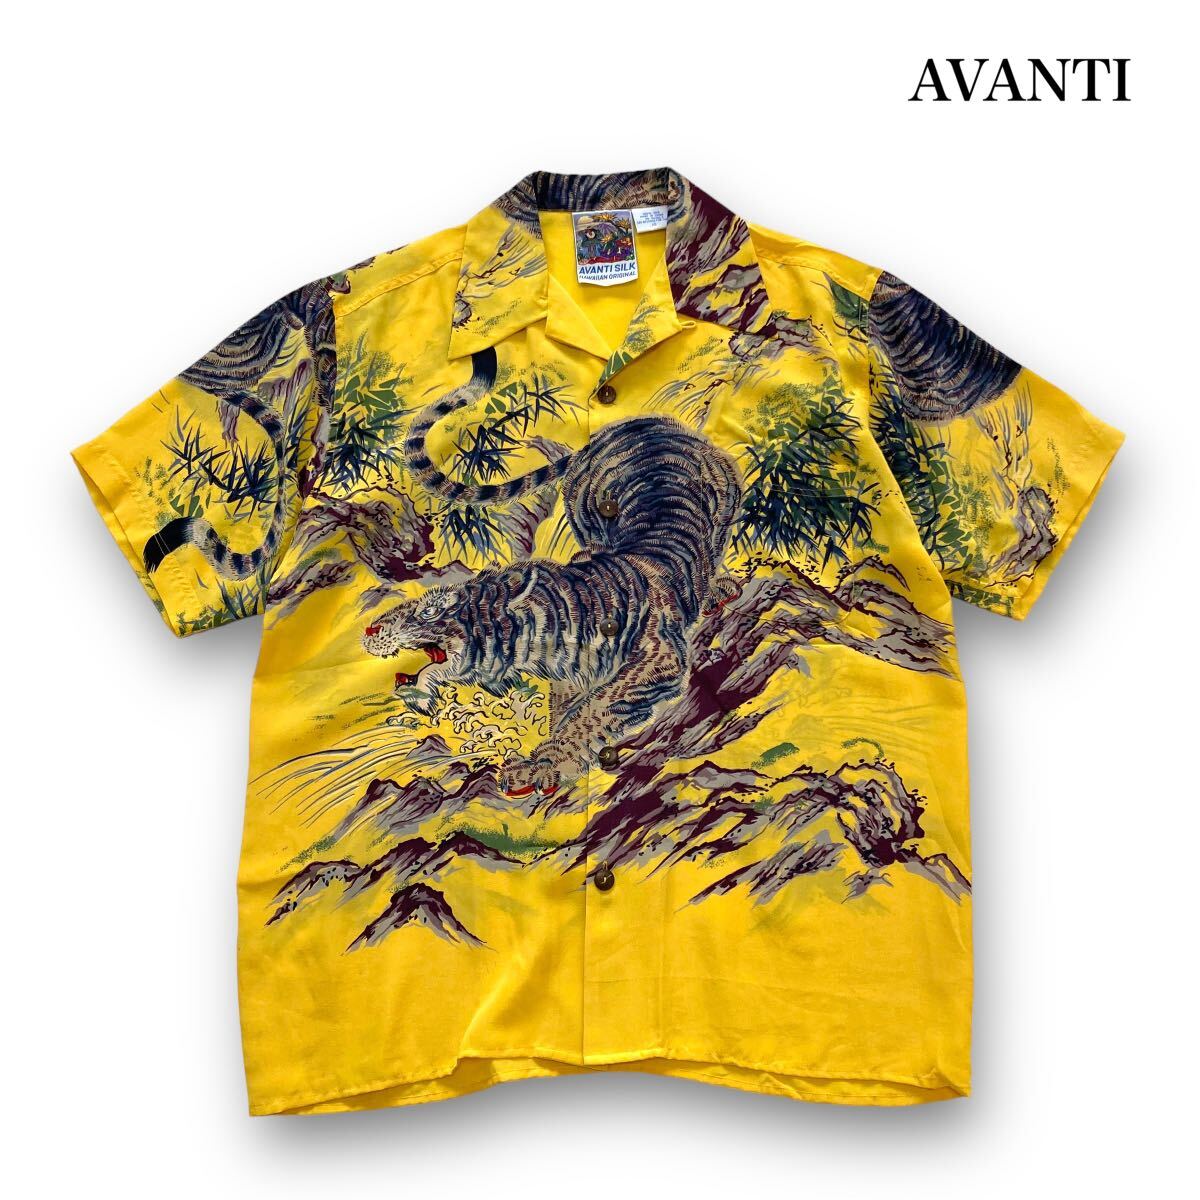 【AVANTI】アバンティ シルクアロハシャツ オープンカラーシャツ 虎 竹 タイガーバンブー 和柄 ハワイアンシャツ ヴィンテージ 旧タグ 黄色